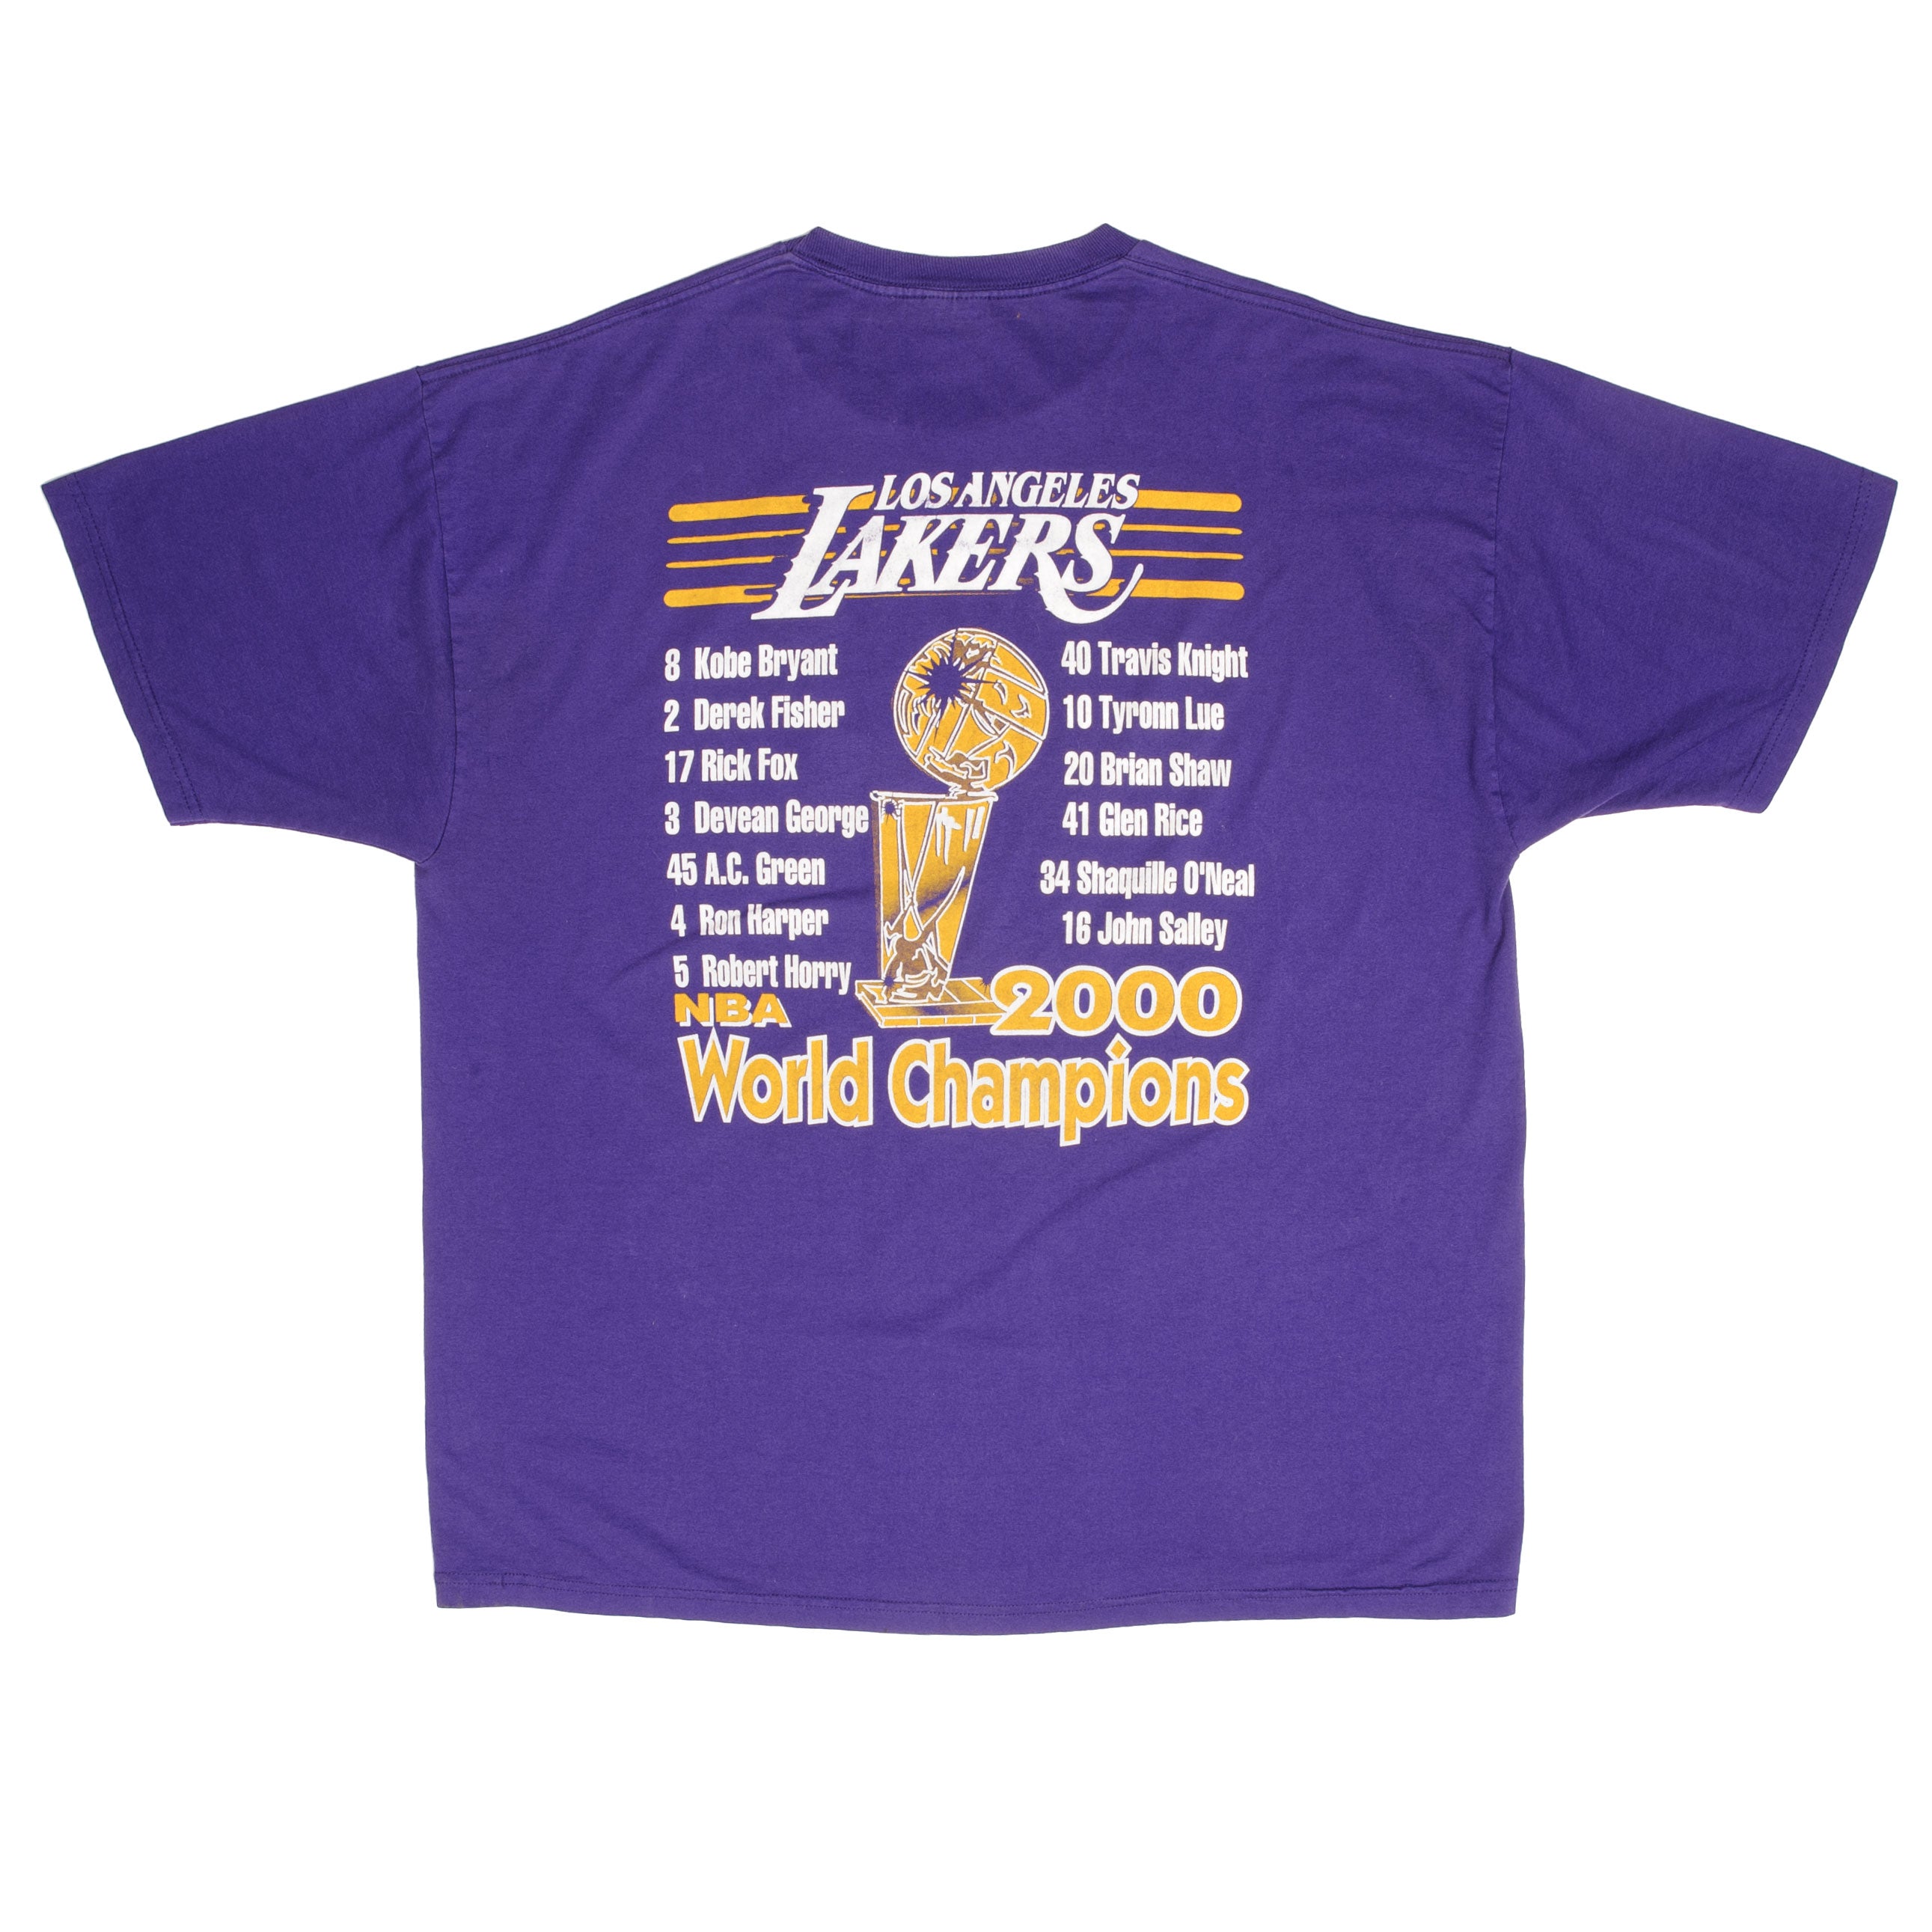 Buy World Champion Los Angeles Lakers 2000 Basketball Shirt For Free  Shipping CUSTOM XMAS PRODUCT COMPANY